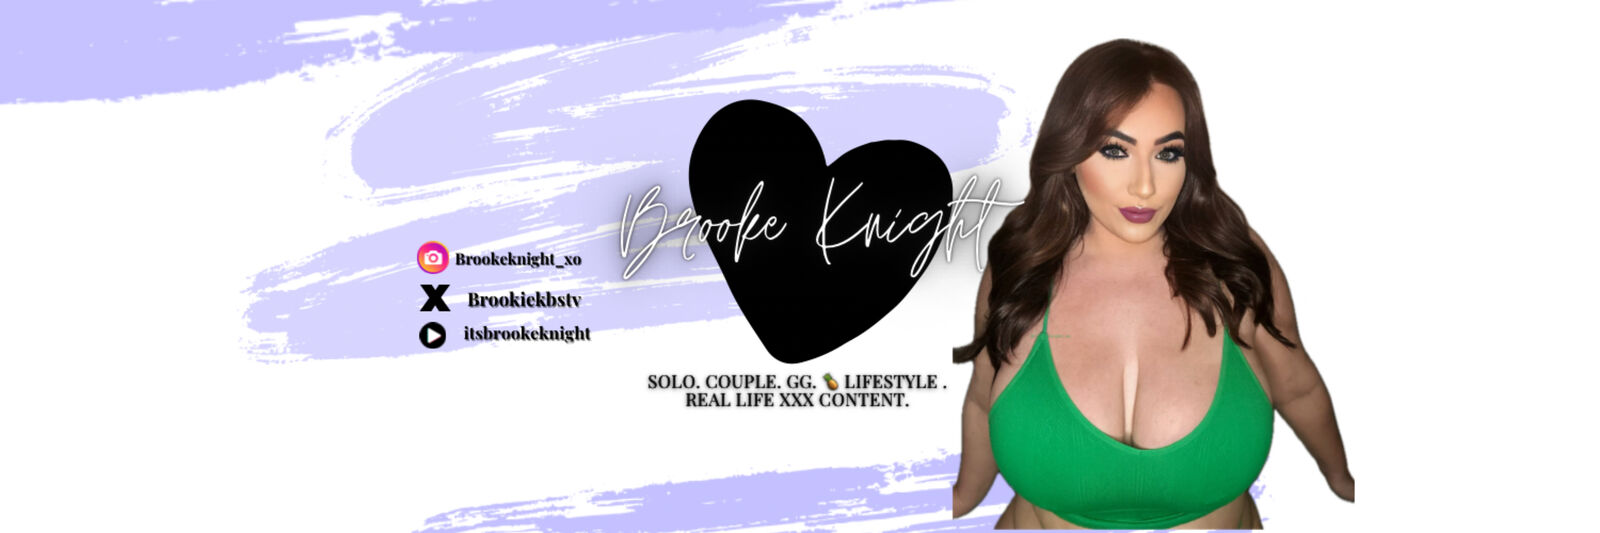 See Brooke knight babestation profile